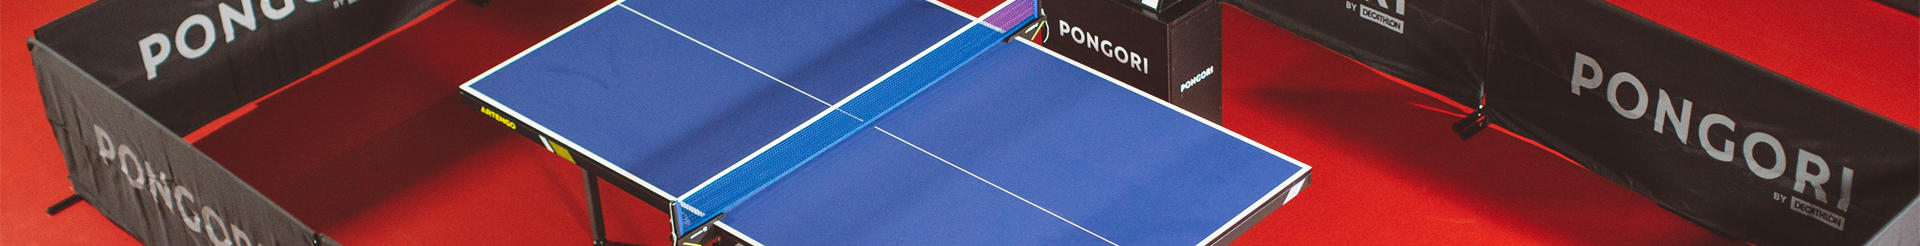 Table Tennis Tables - Buy TT Tables 